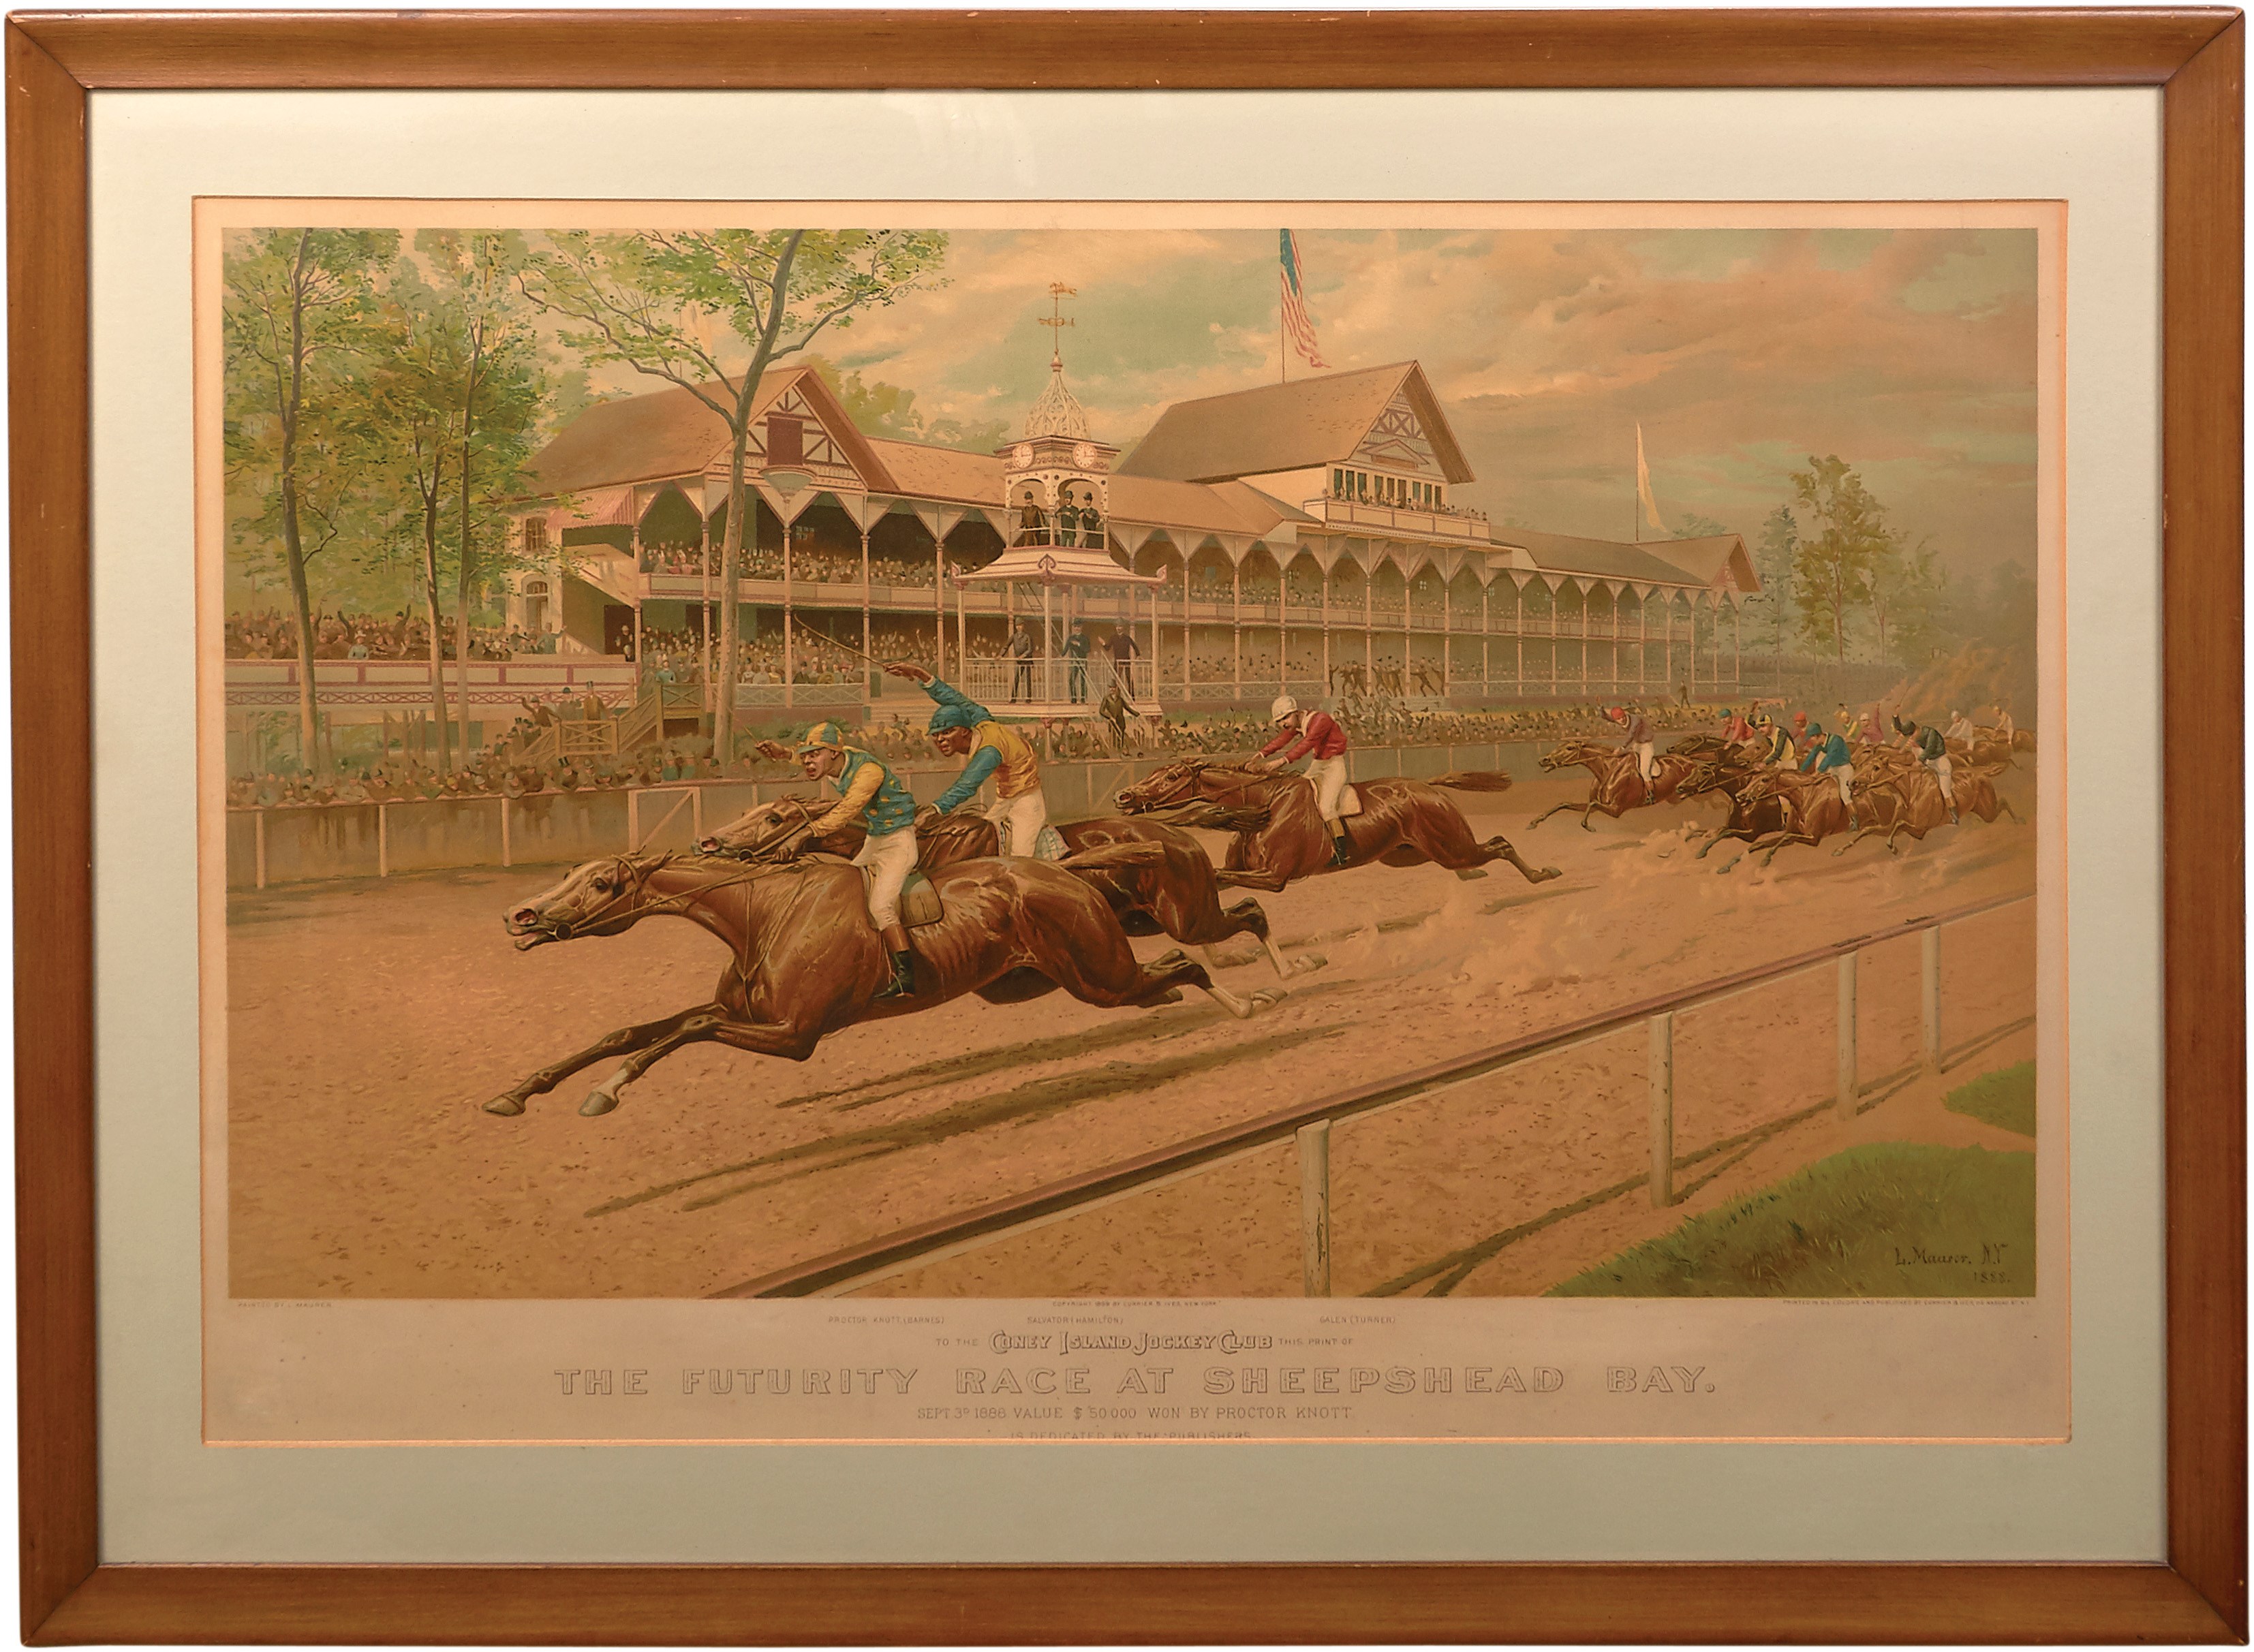 - Splendid 1888 Currier & Ives “The Futurity Race at Sheepshead Bay” Original Print